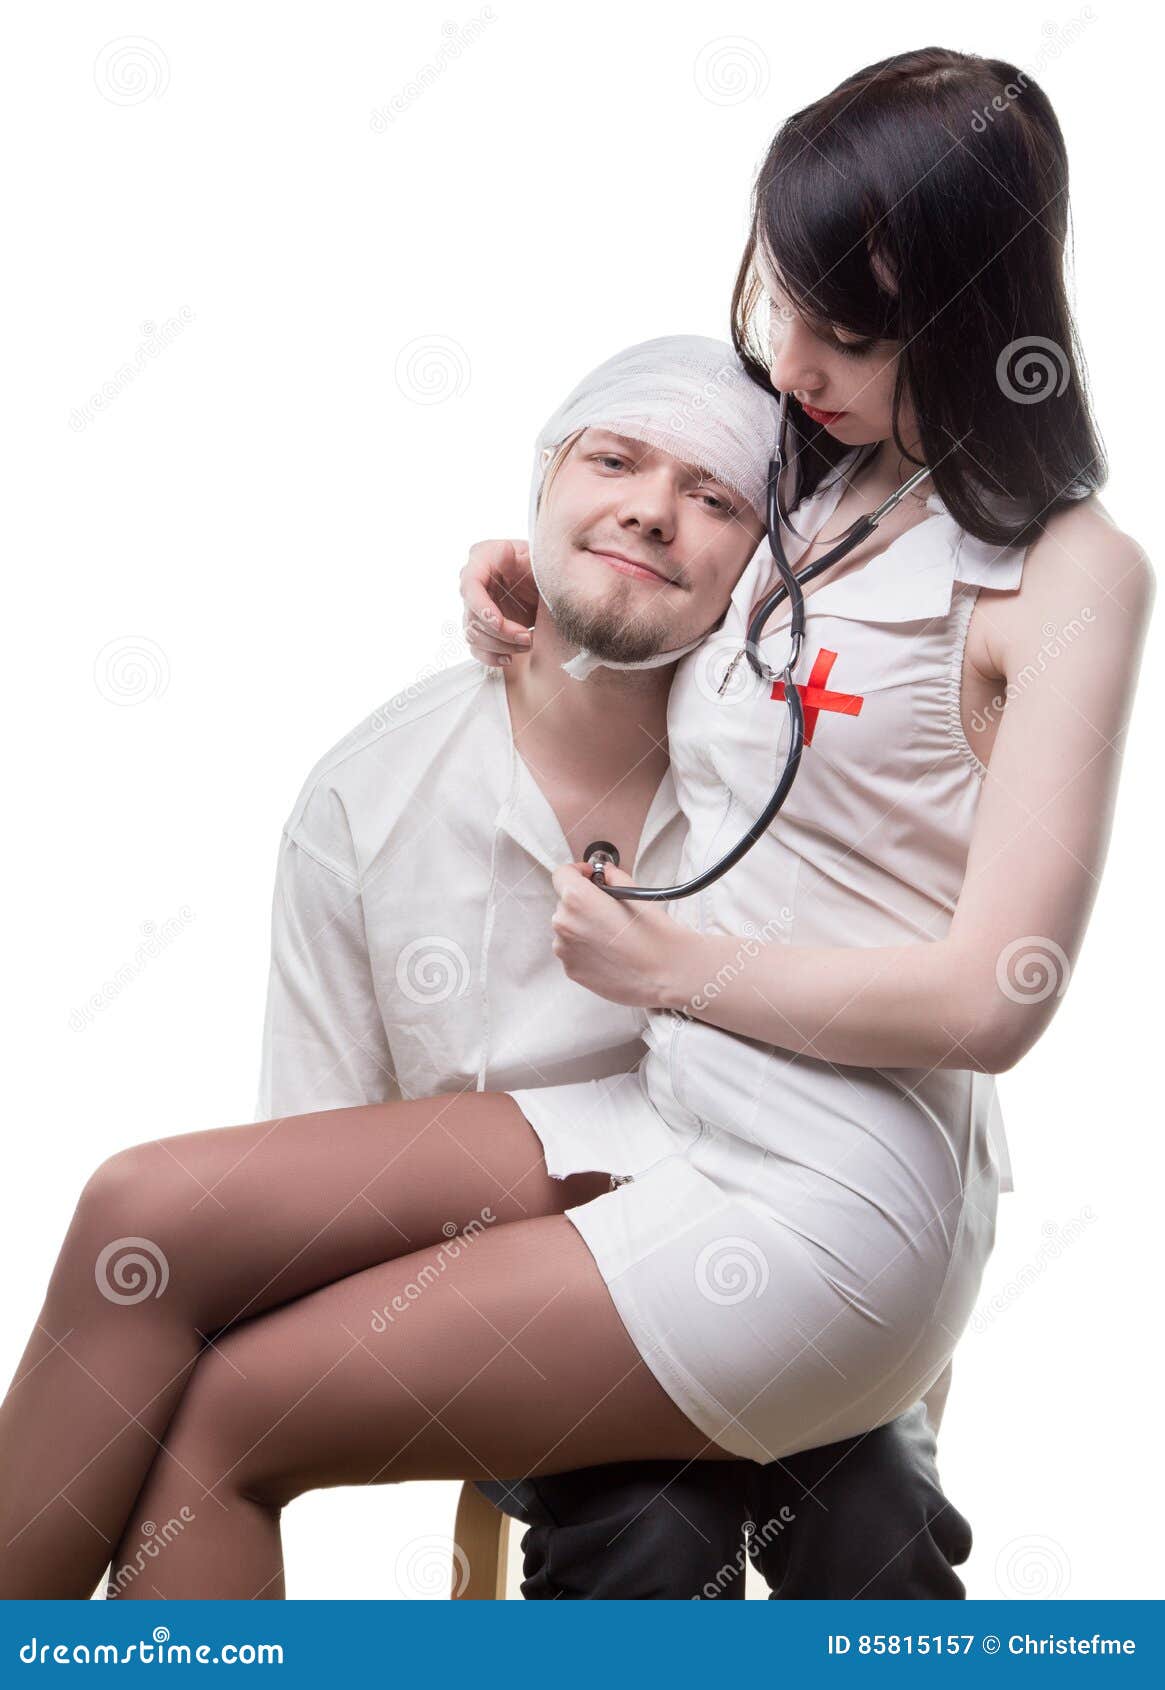 sexual-nurse-patient-white-background-85